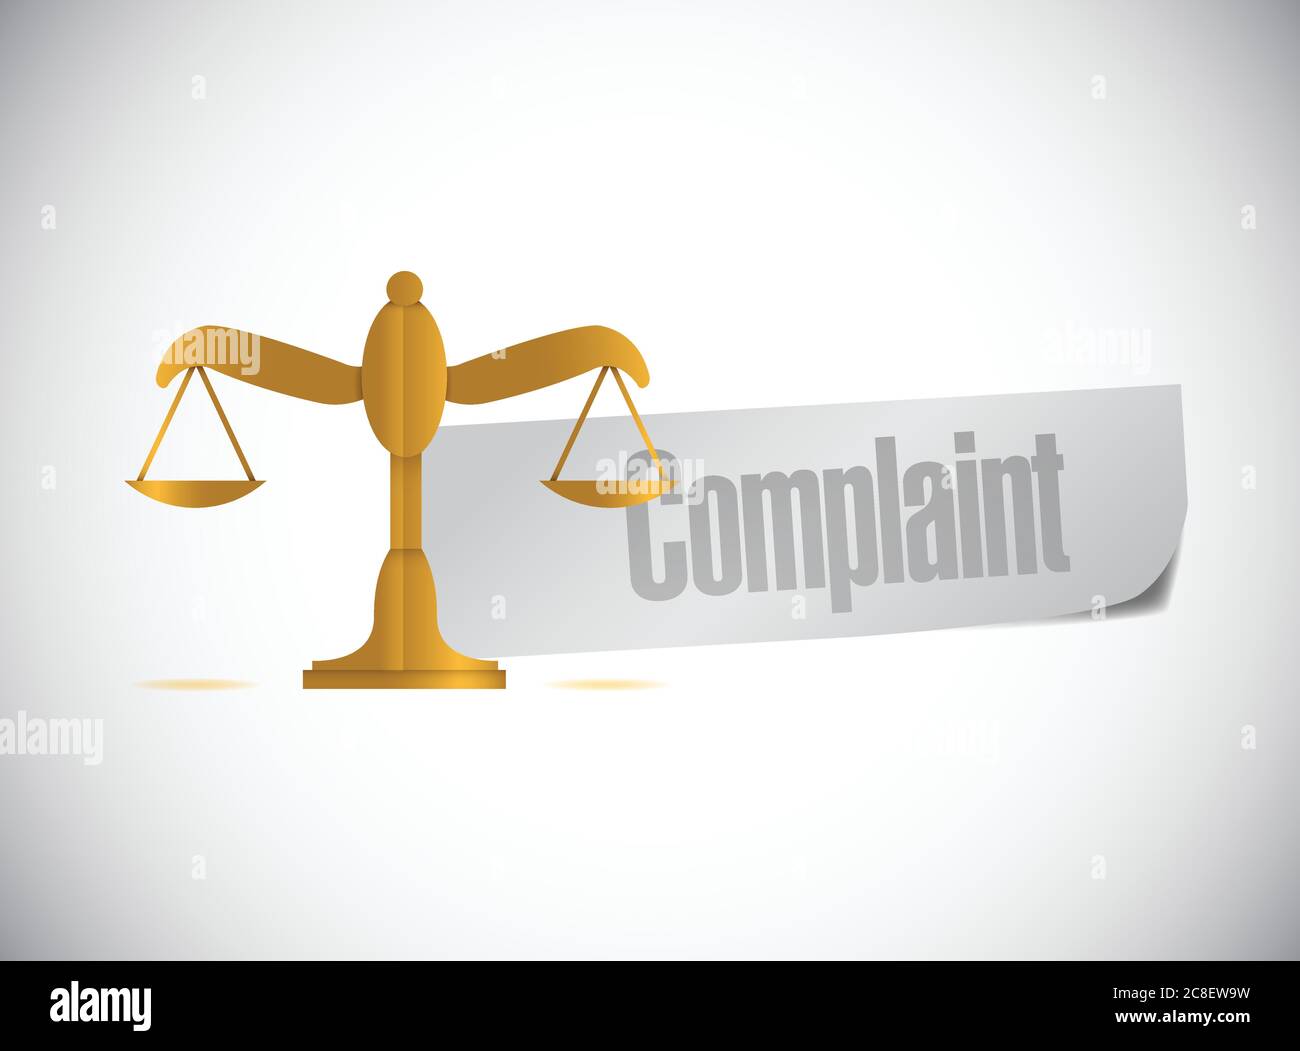 Complaint balance sign illustration design over a white background Stock Vector